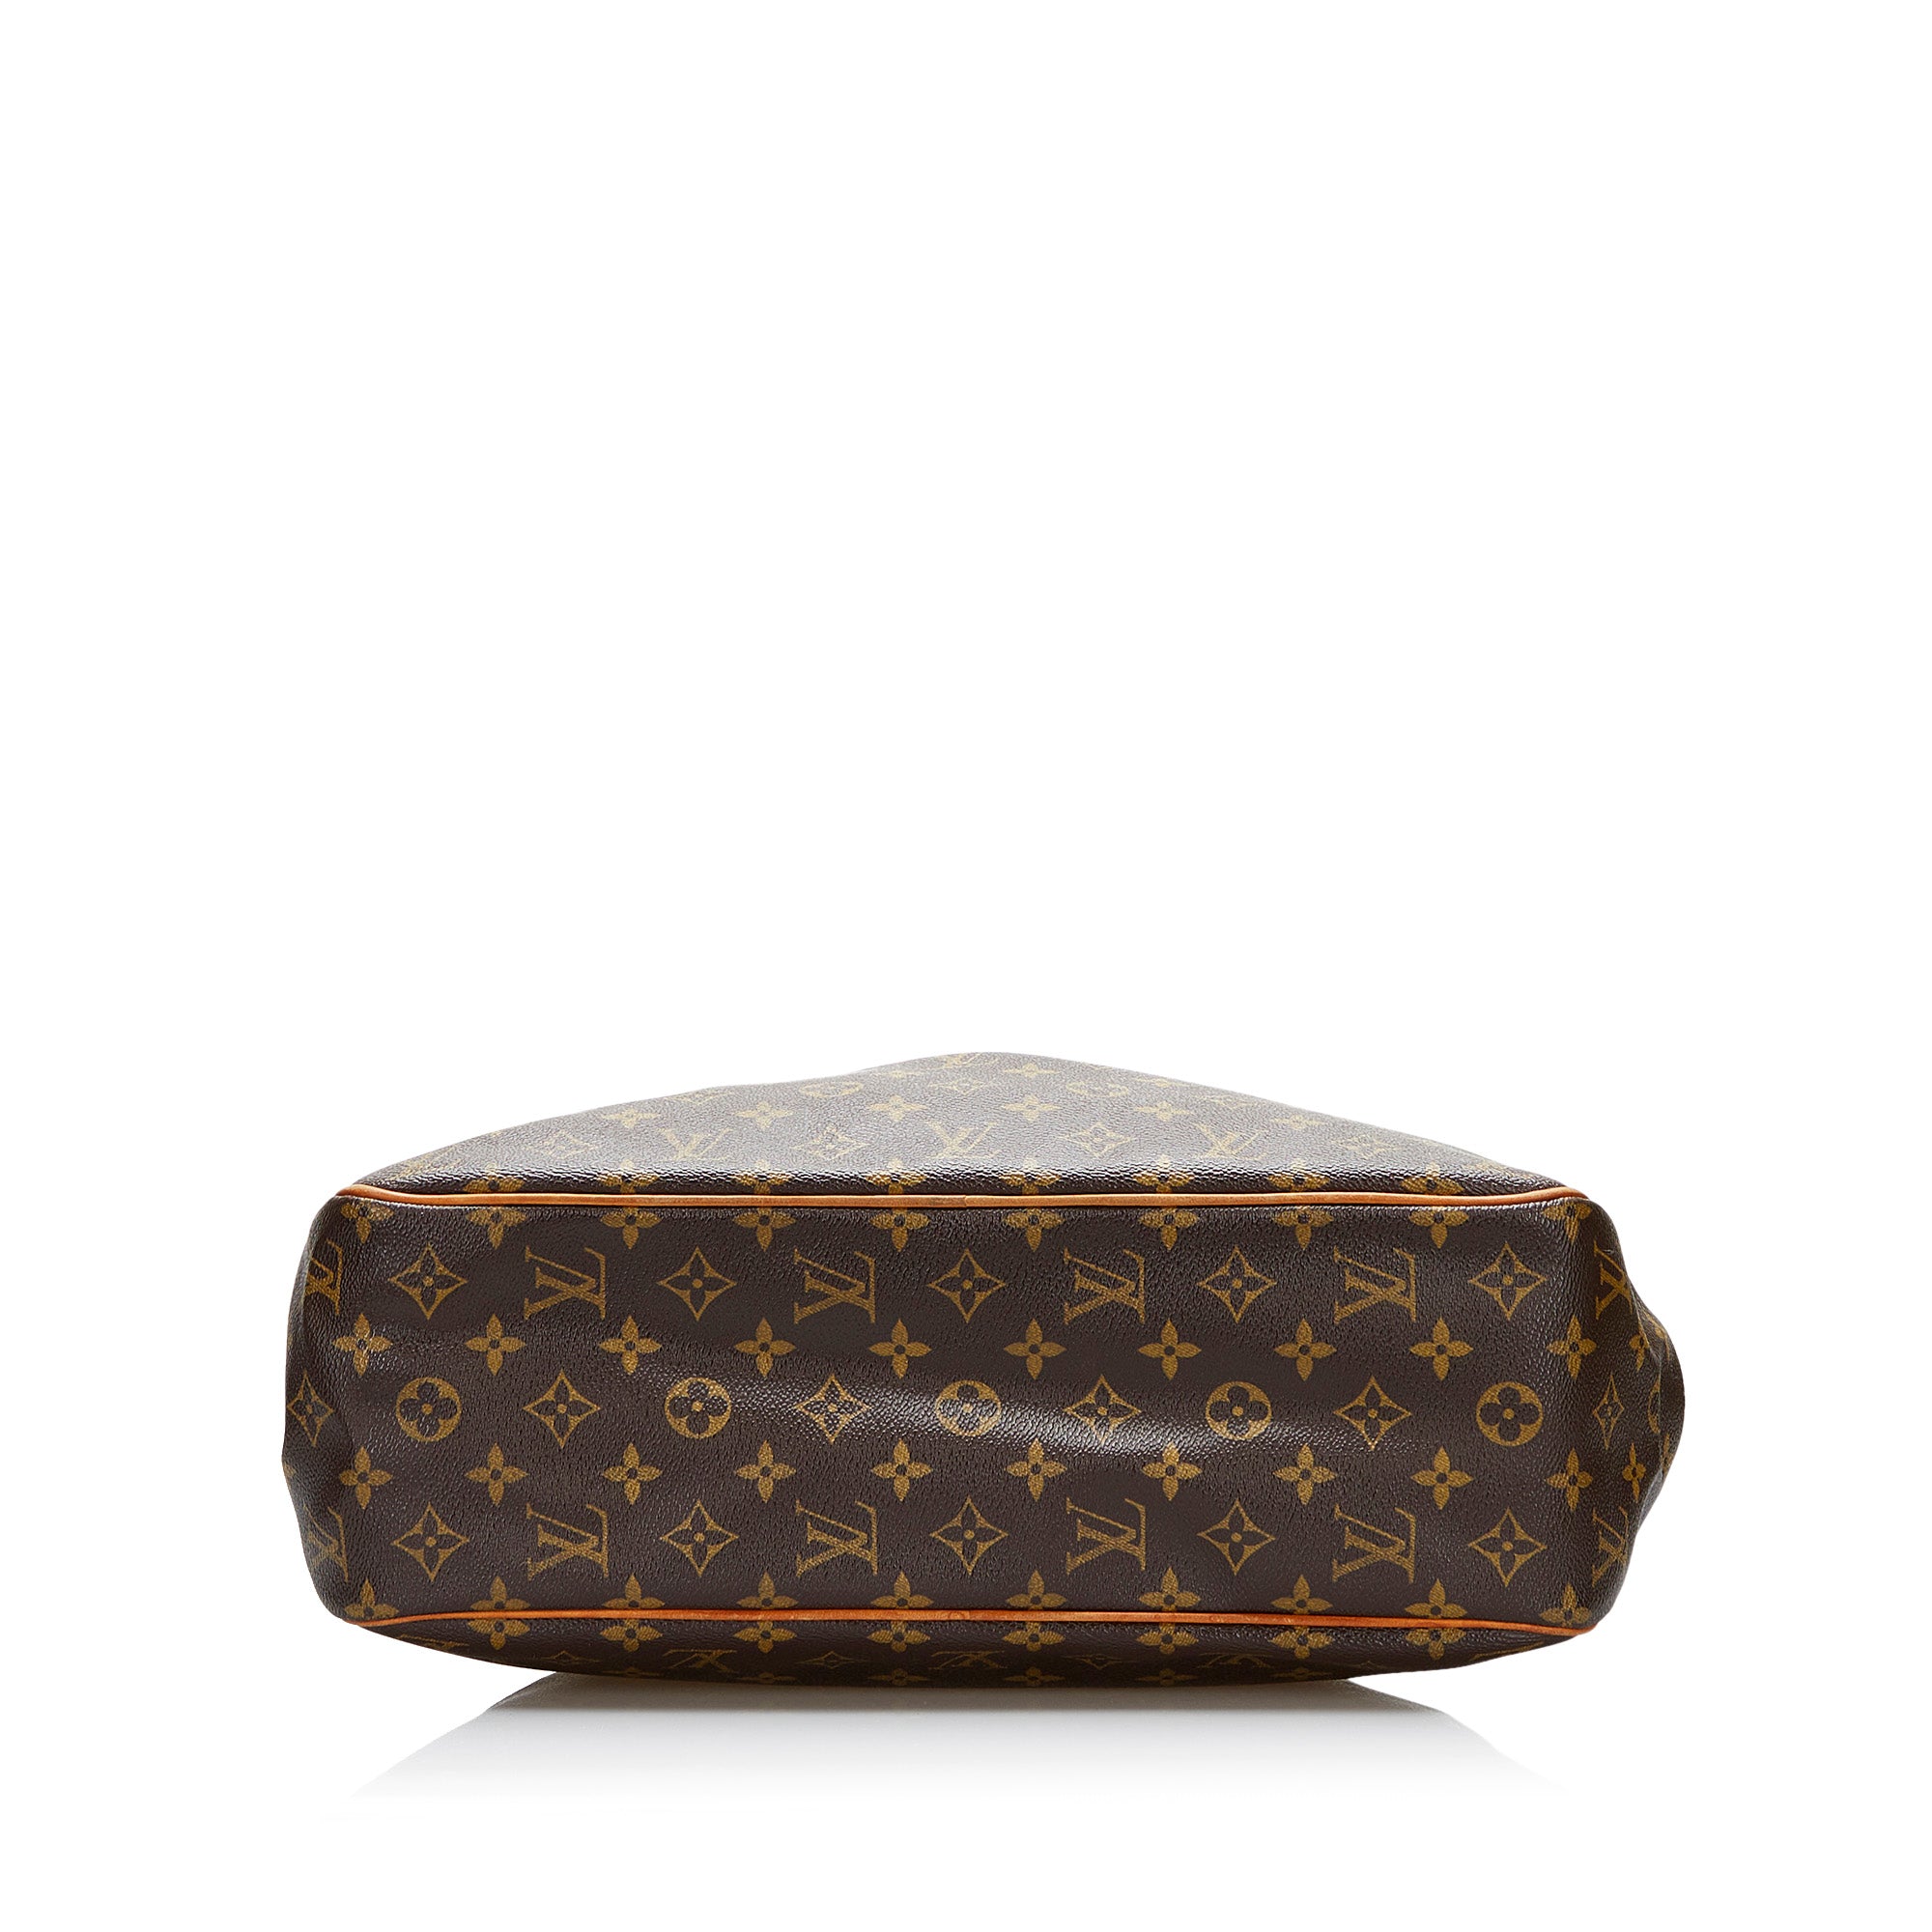 Brown Louis Vuitton Monogram Lockit Vertical Handbag, GottliebpaludanShops  Revival